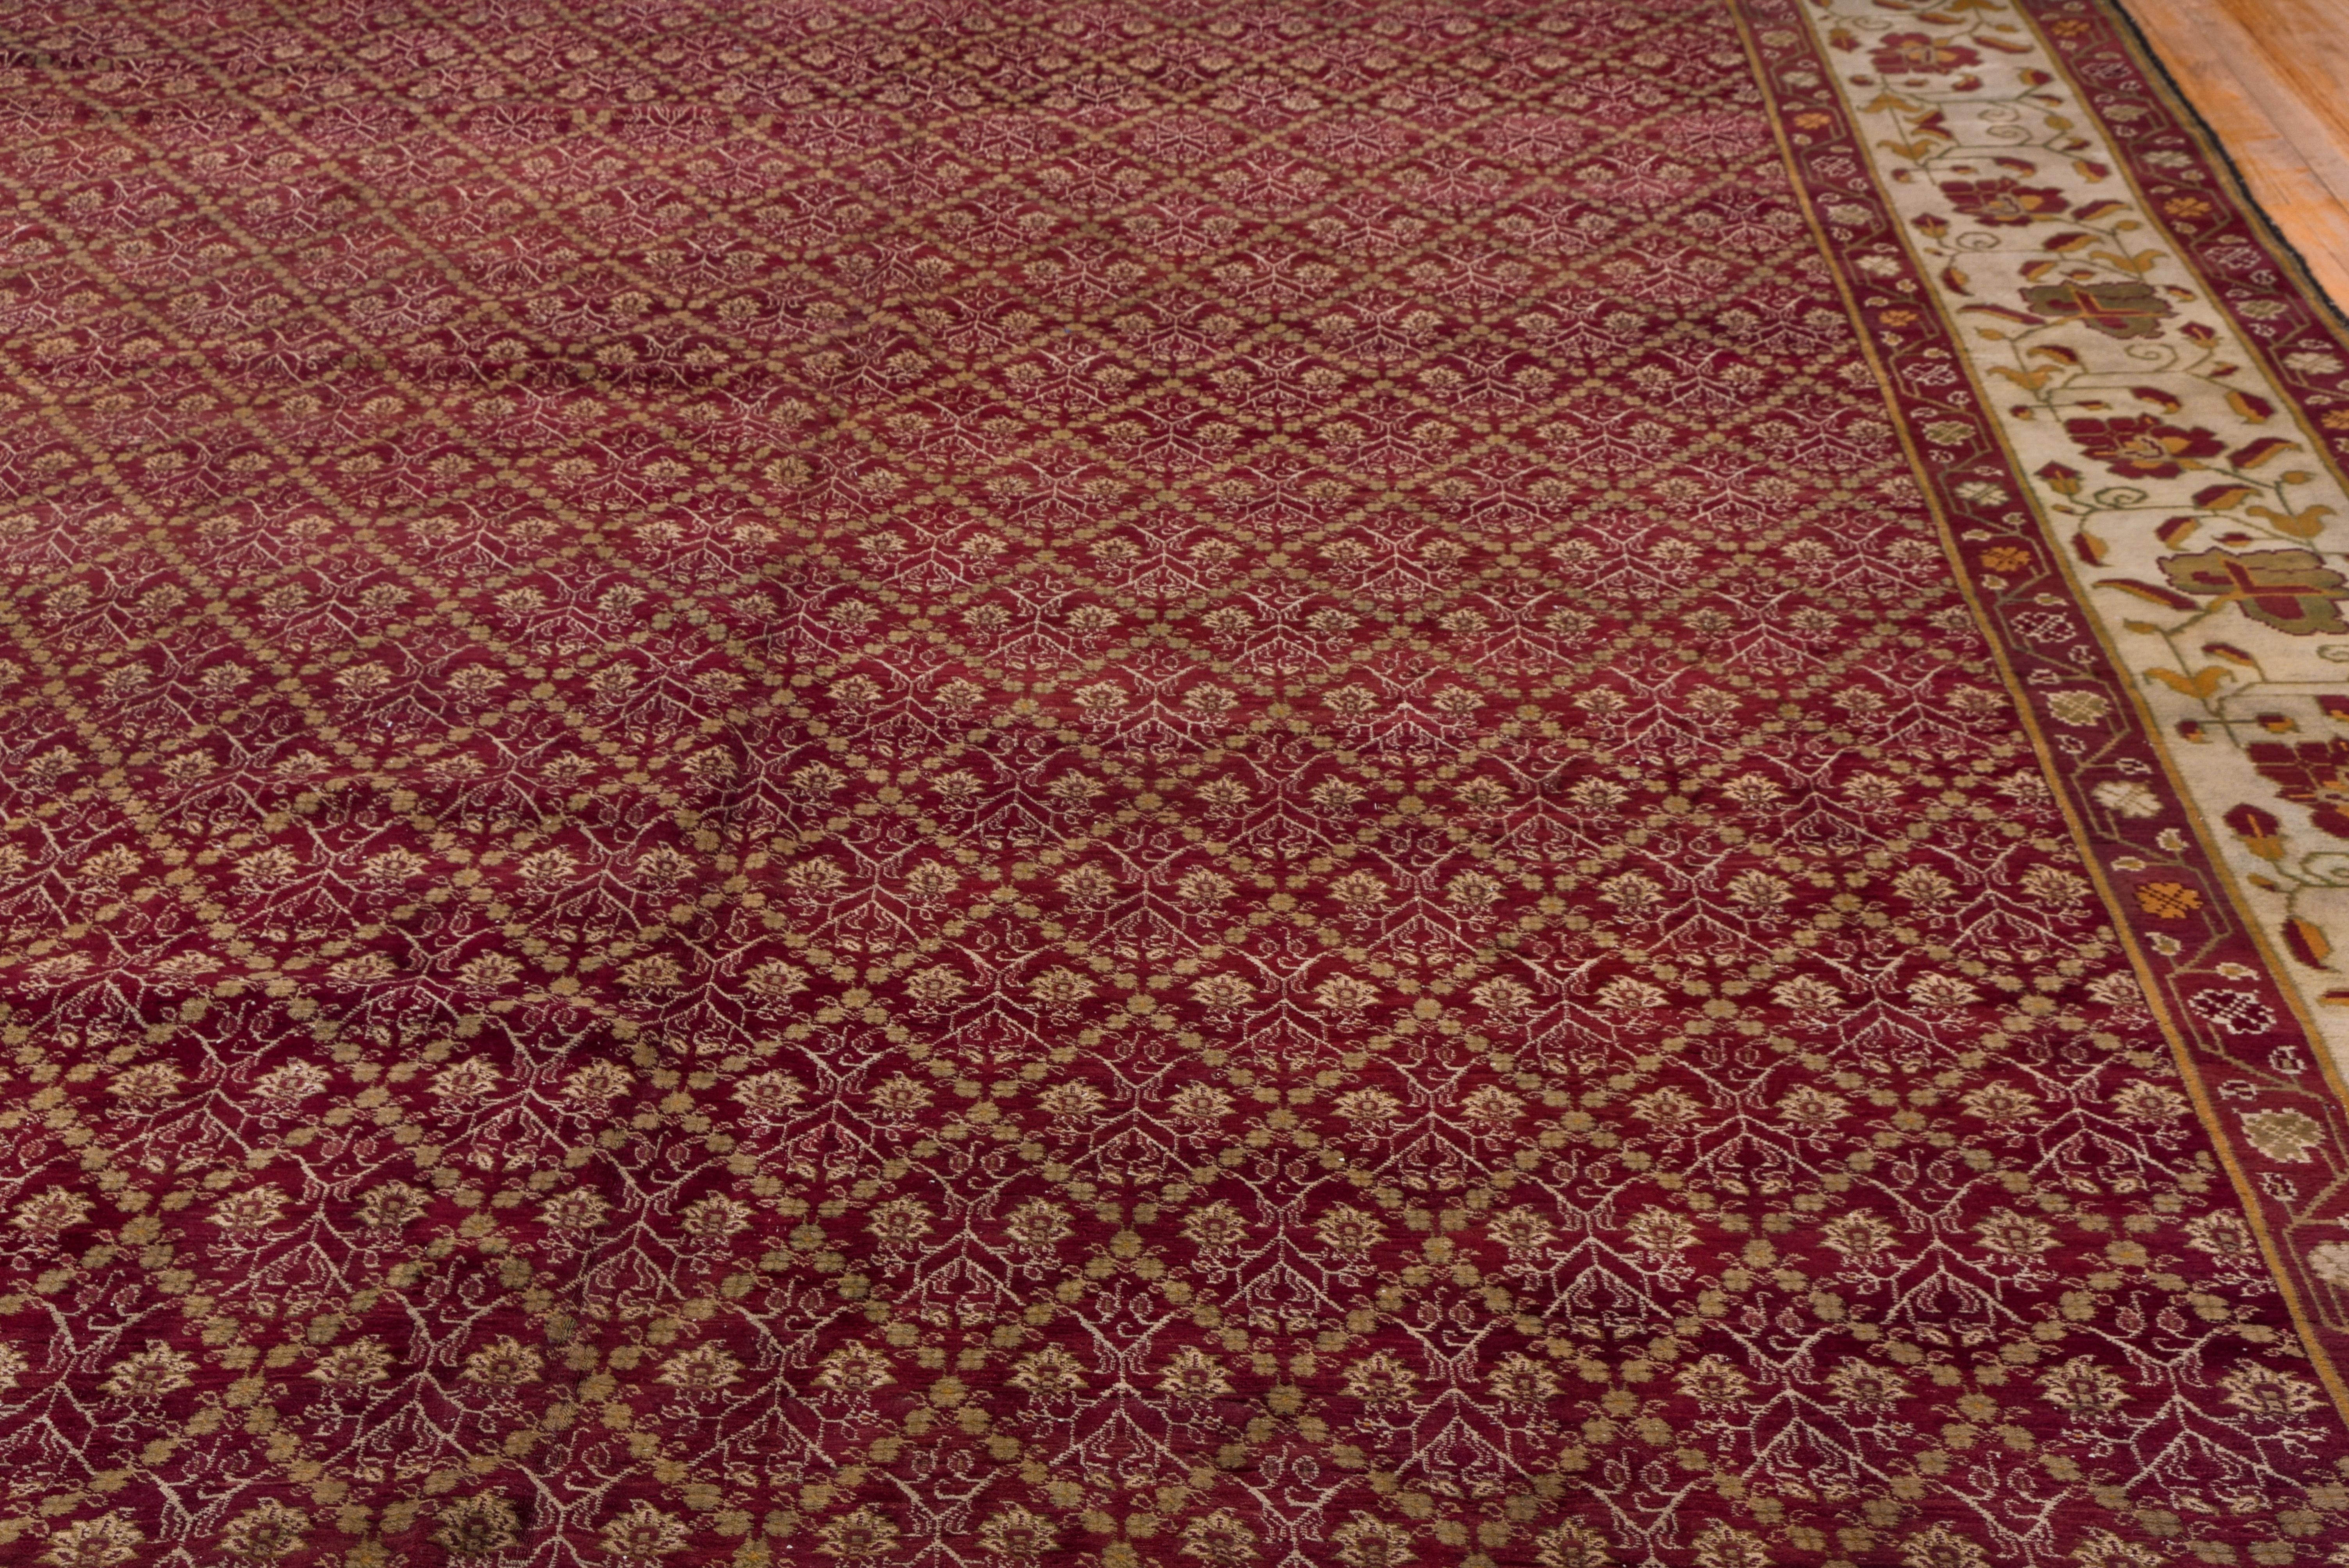 Early 20th Century Amazing Antique Indian Agra Carpet, circa 1900s